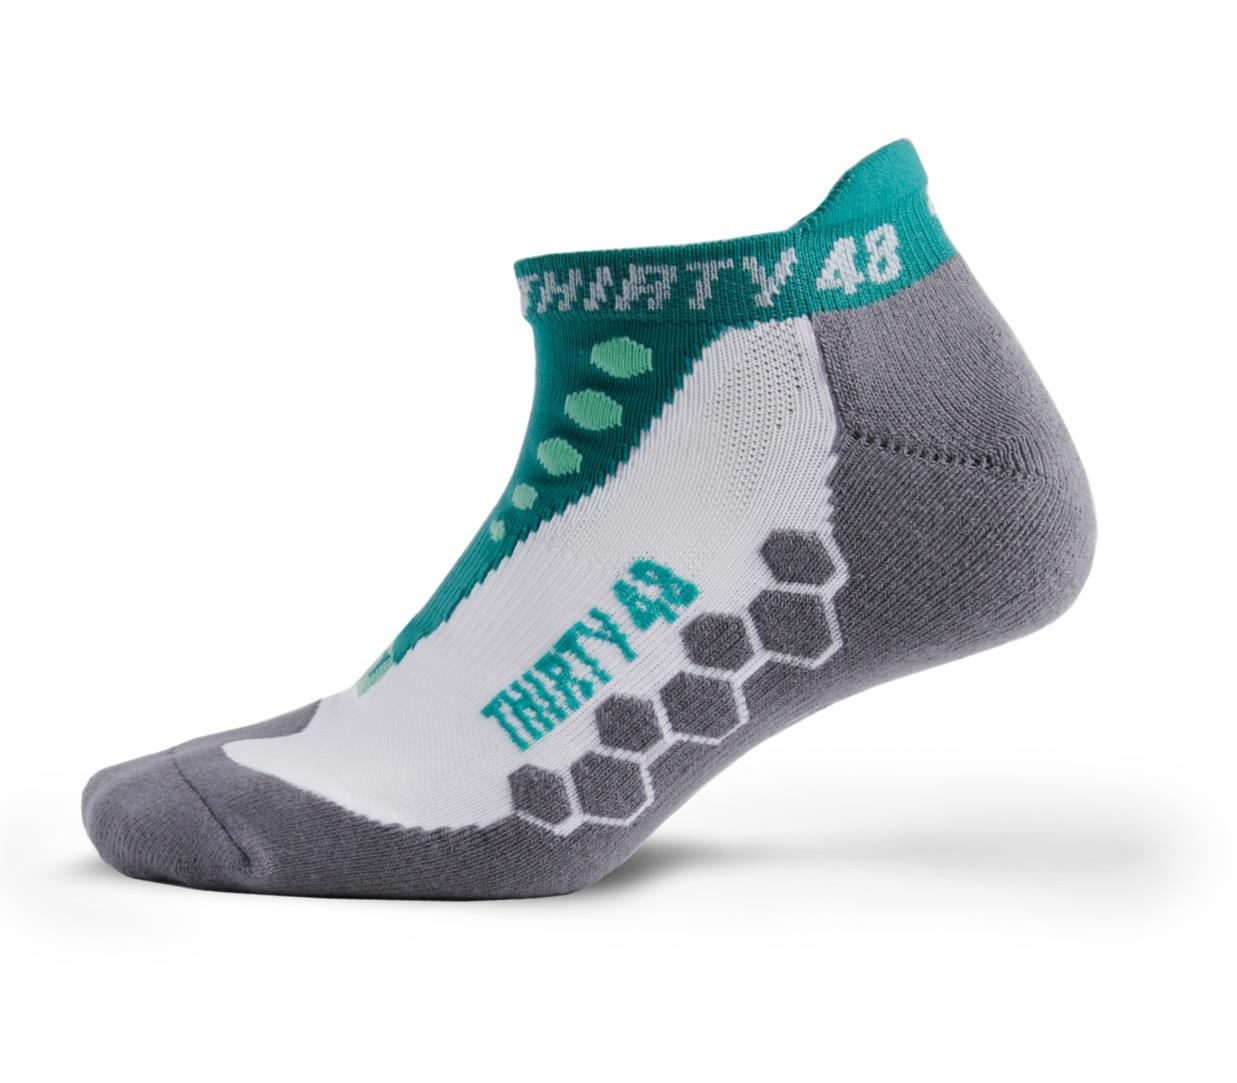 Thirty48 Running Socks Pair Unisex, CoolMax® Fabric Keeps Feet Cool & Dry 